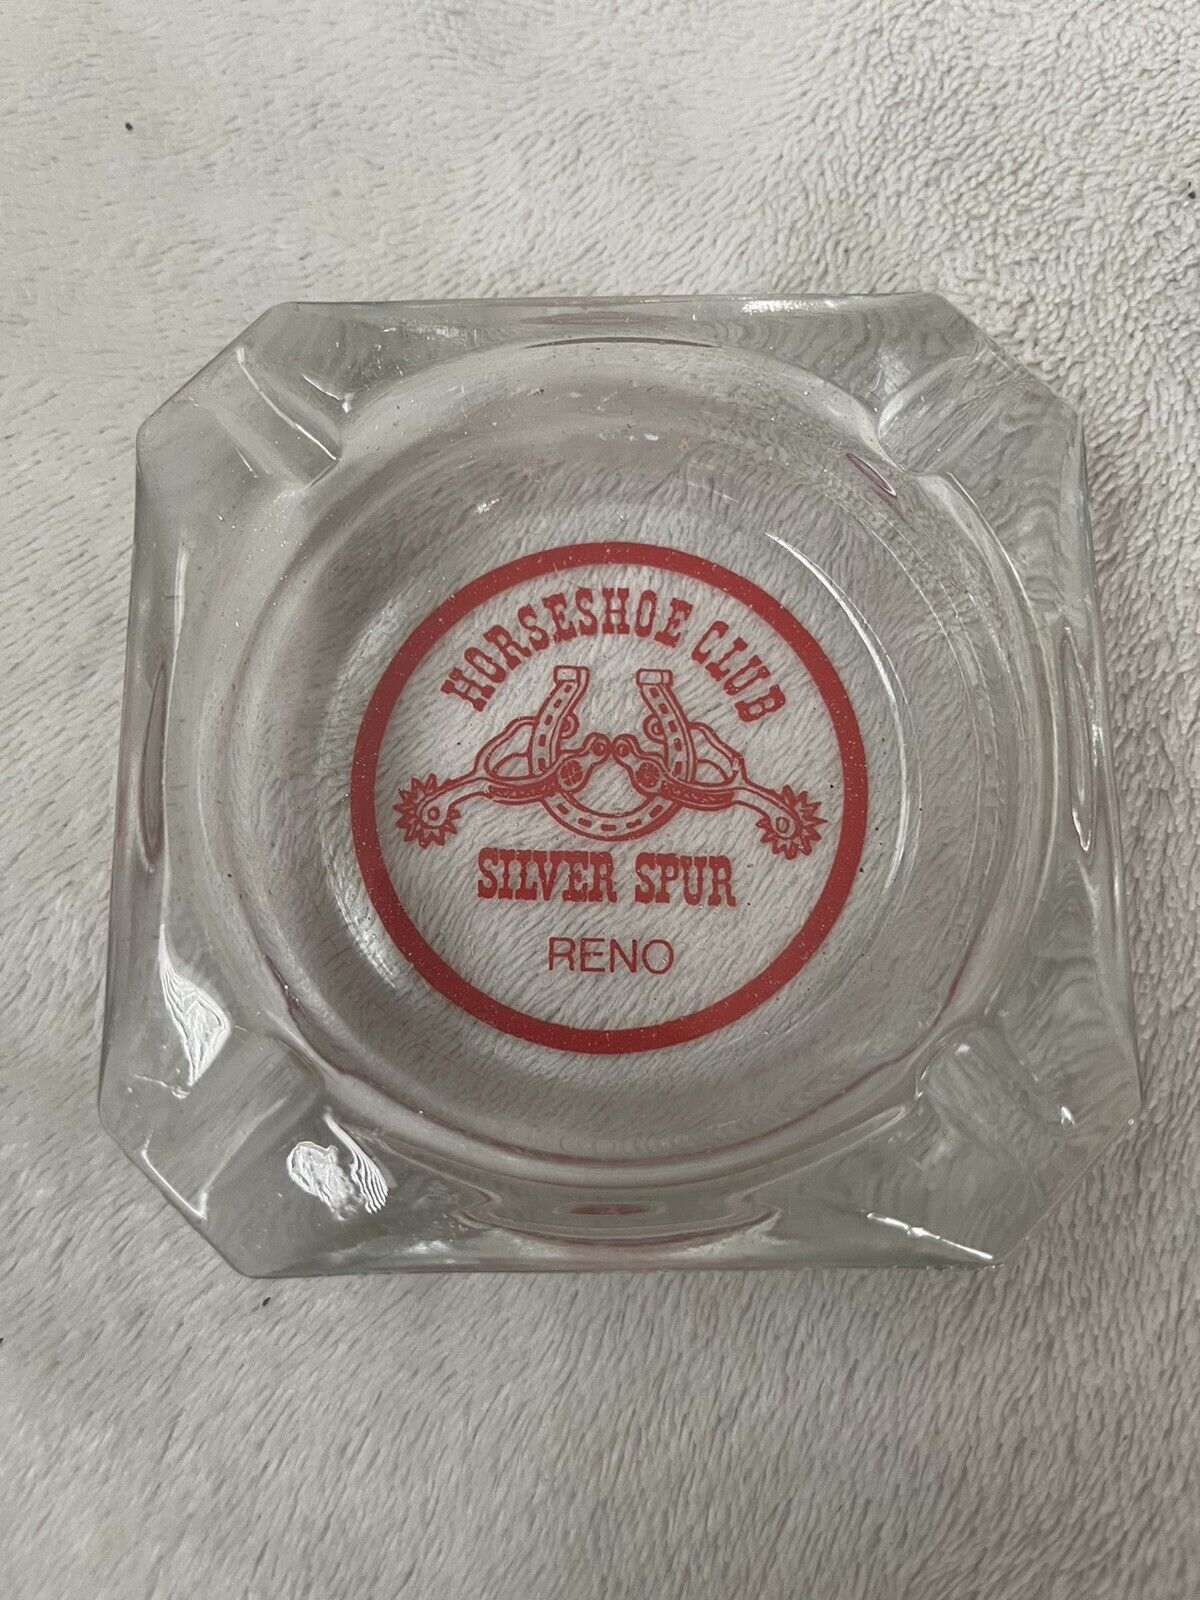 Vintage Glass Horseshoe Club Silver Spur Reno Ashtray